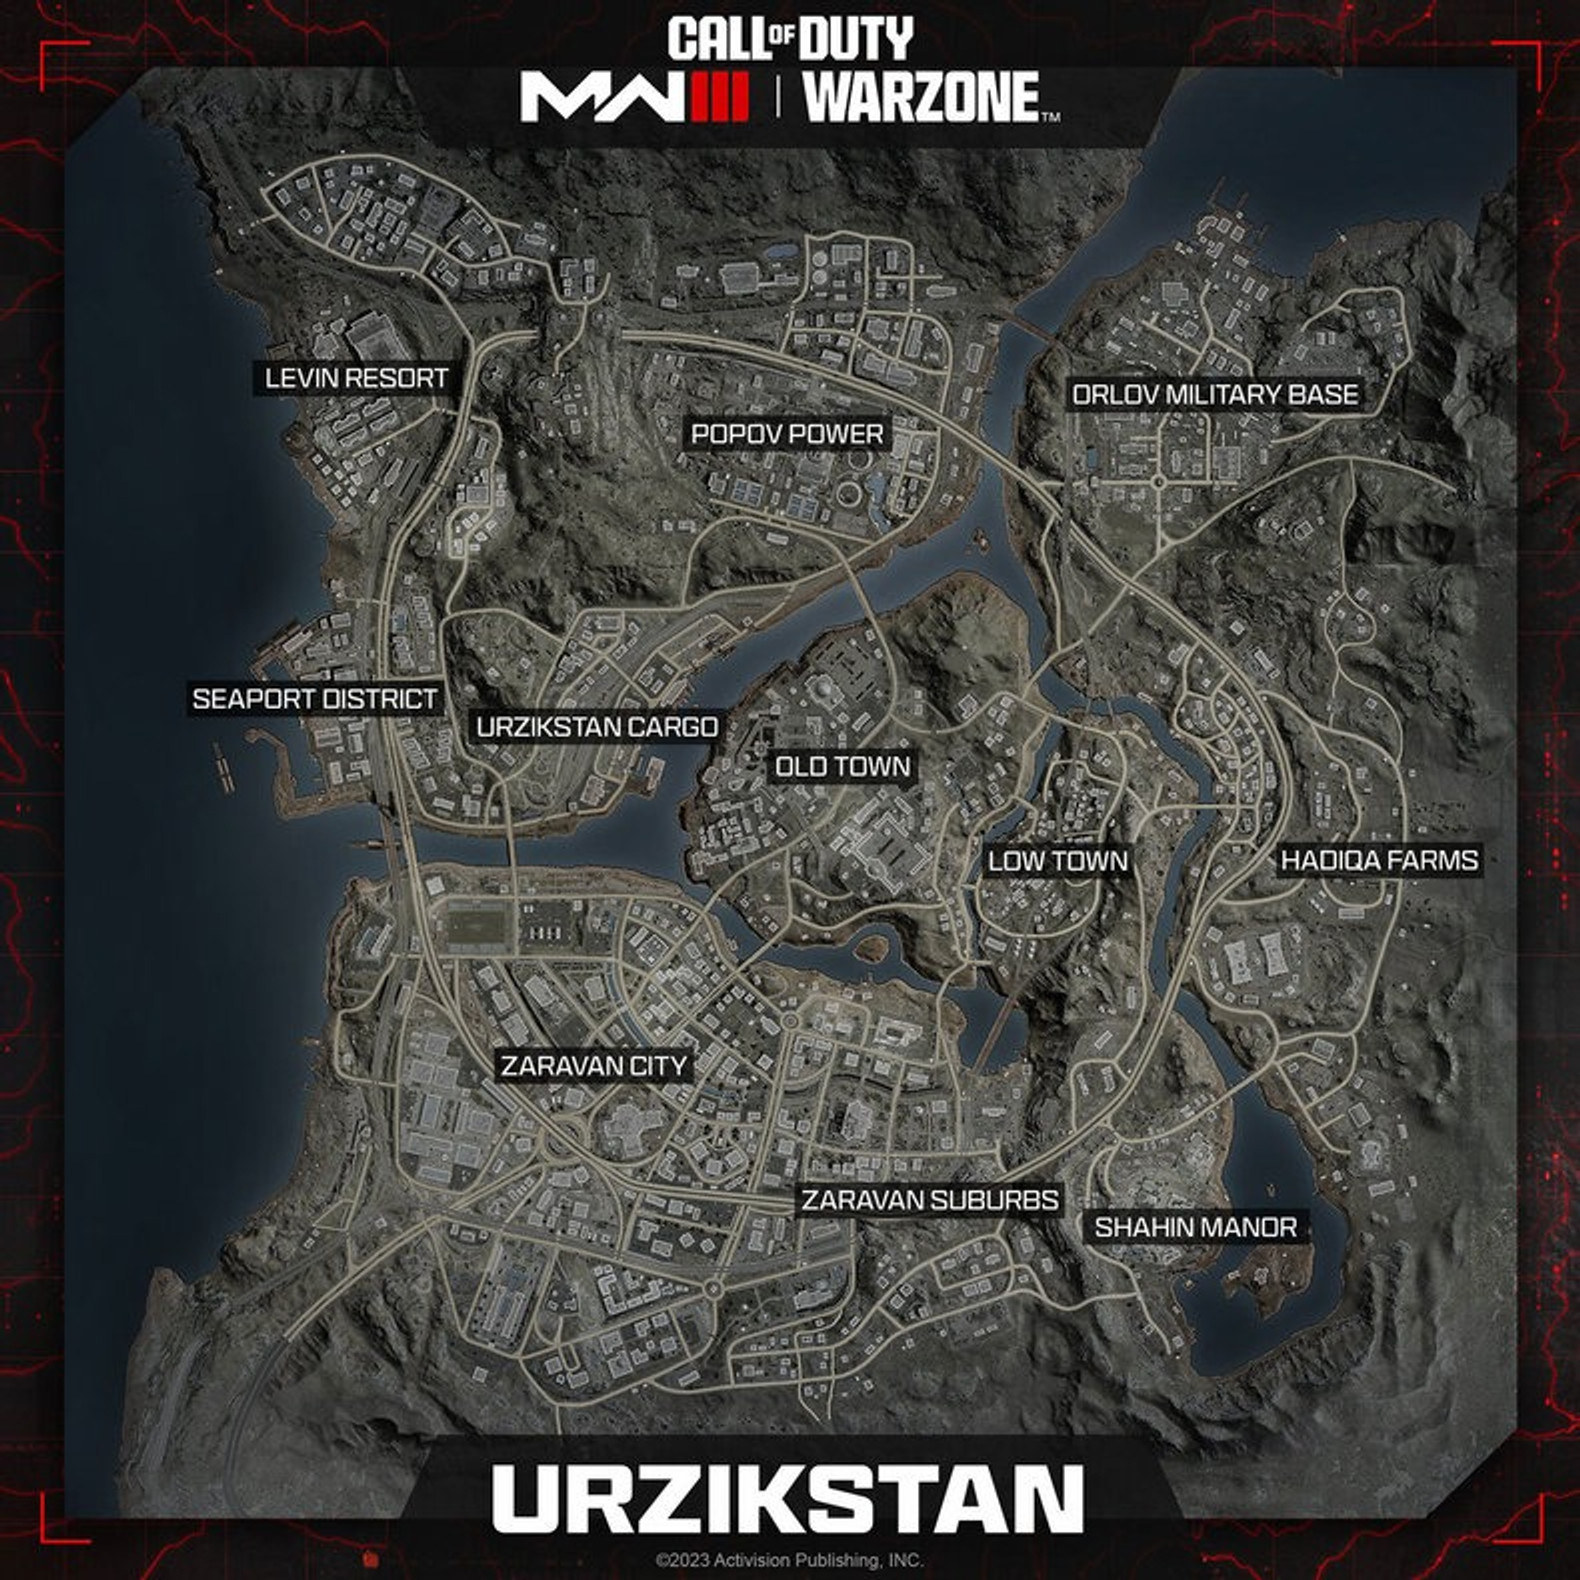 warzone-3-carte-urzikstan